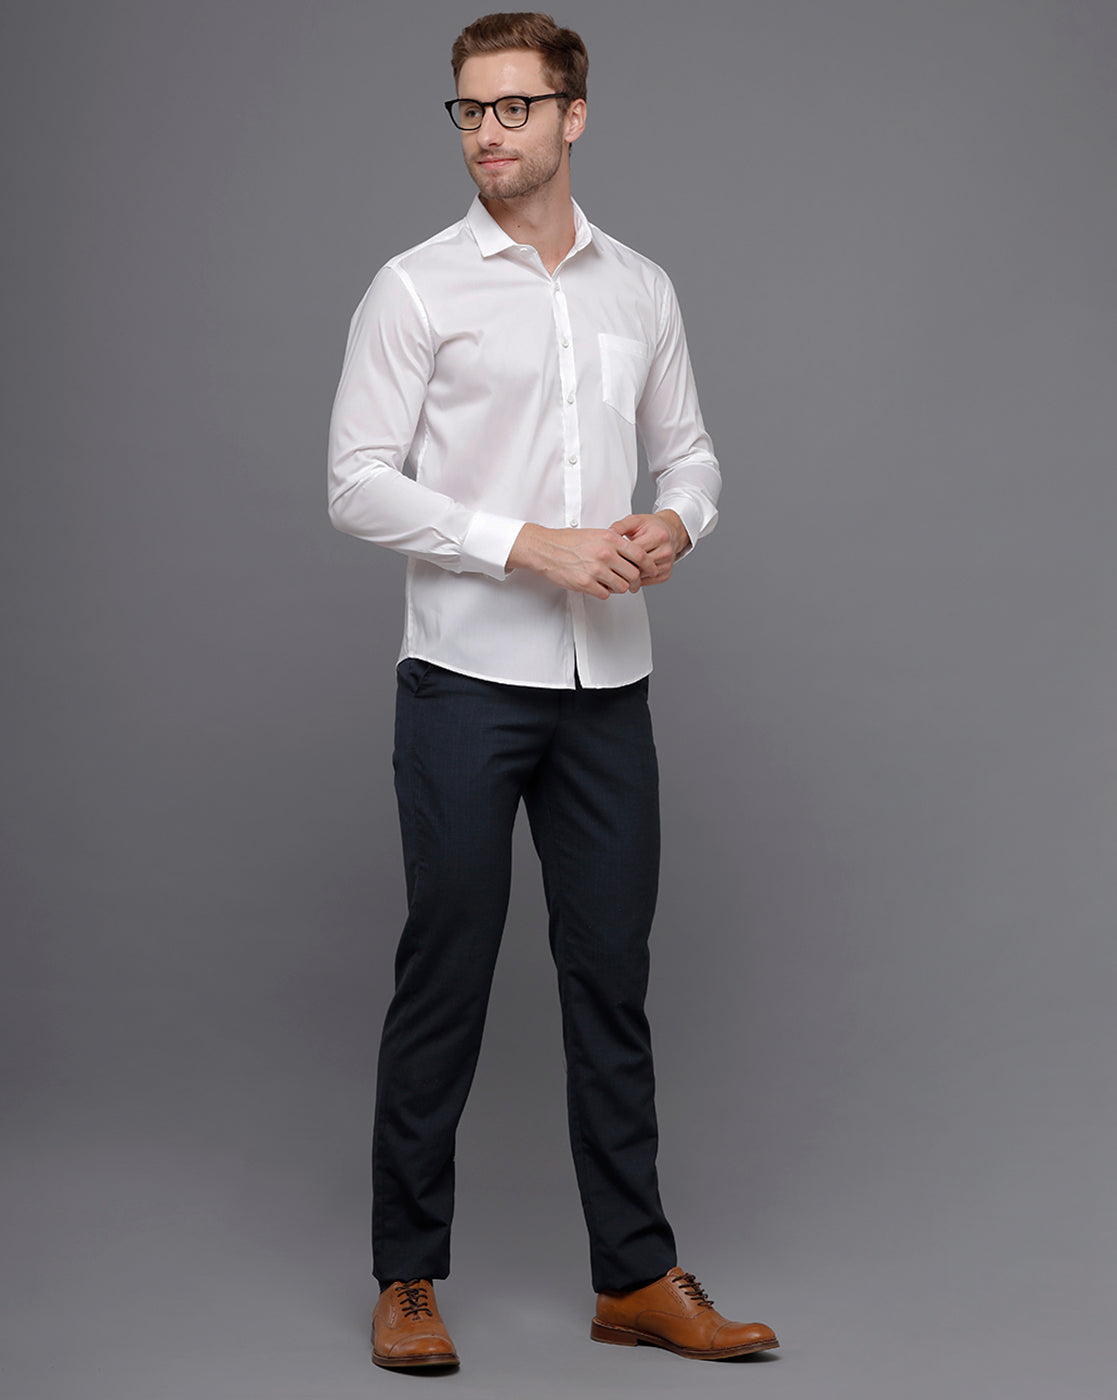 Slim fit white formal shirt